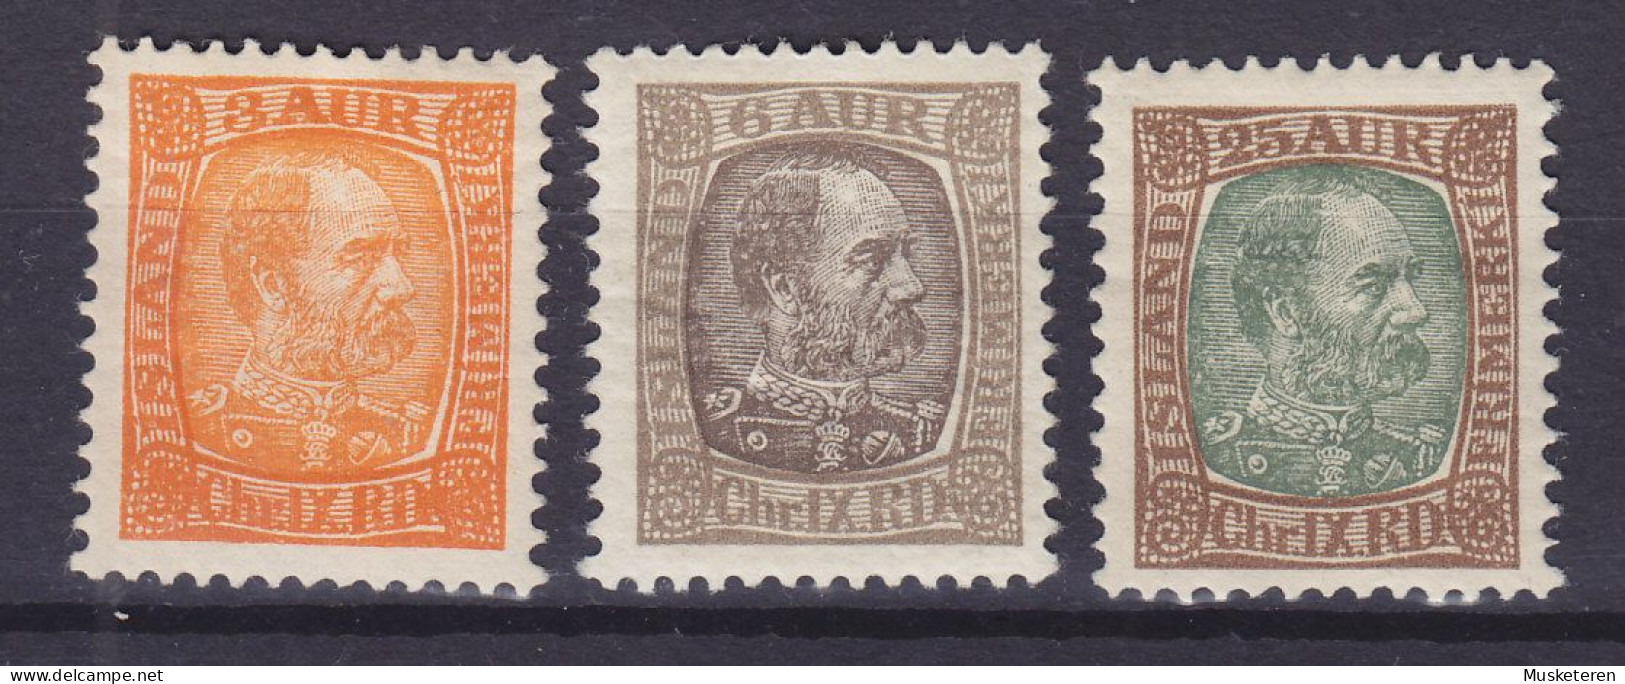 Iceland 1902 Mi. 35, 38, 42, 3 Aur, 6 Aur, 25 Aur Christian IX., MH* (2 Scans) - Neufs